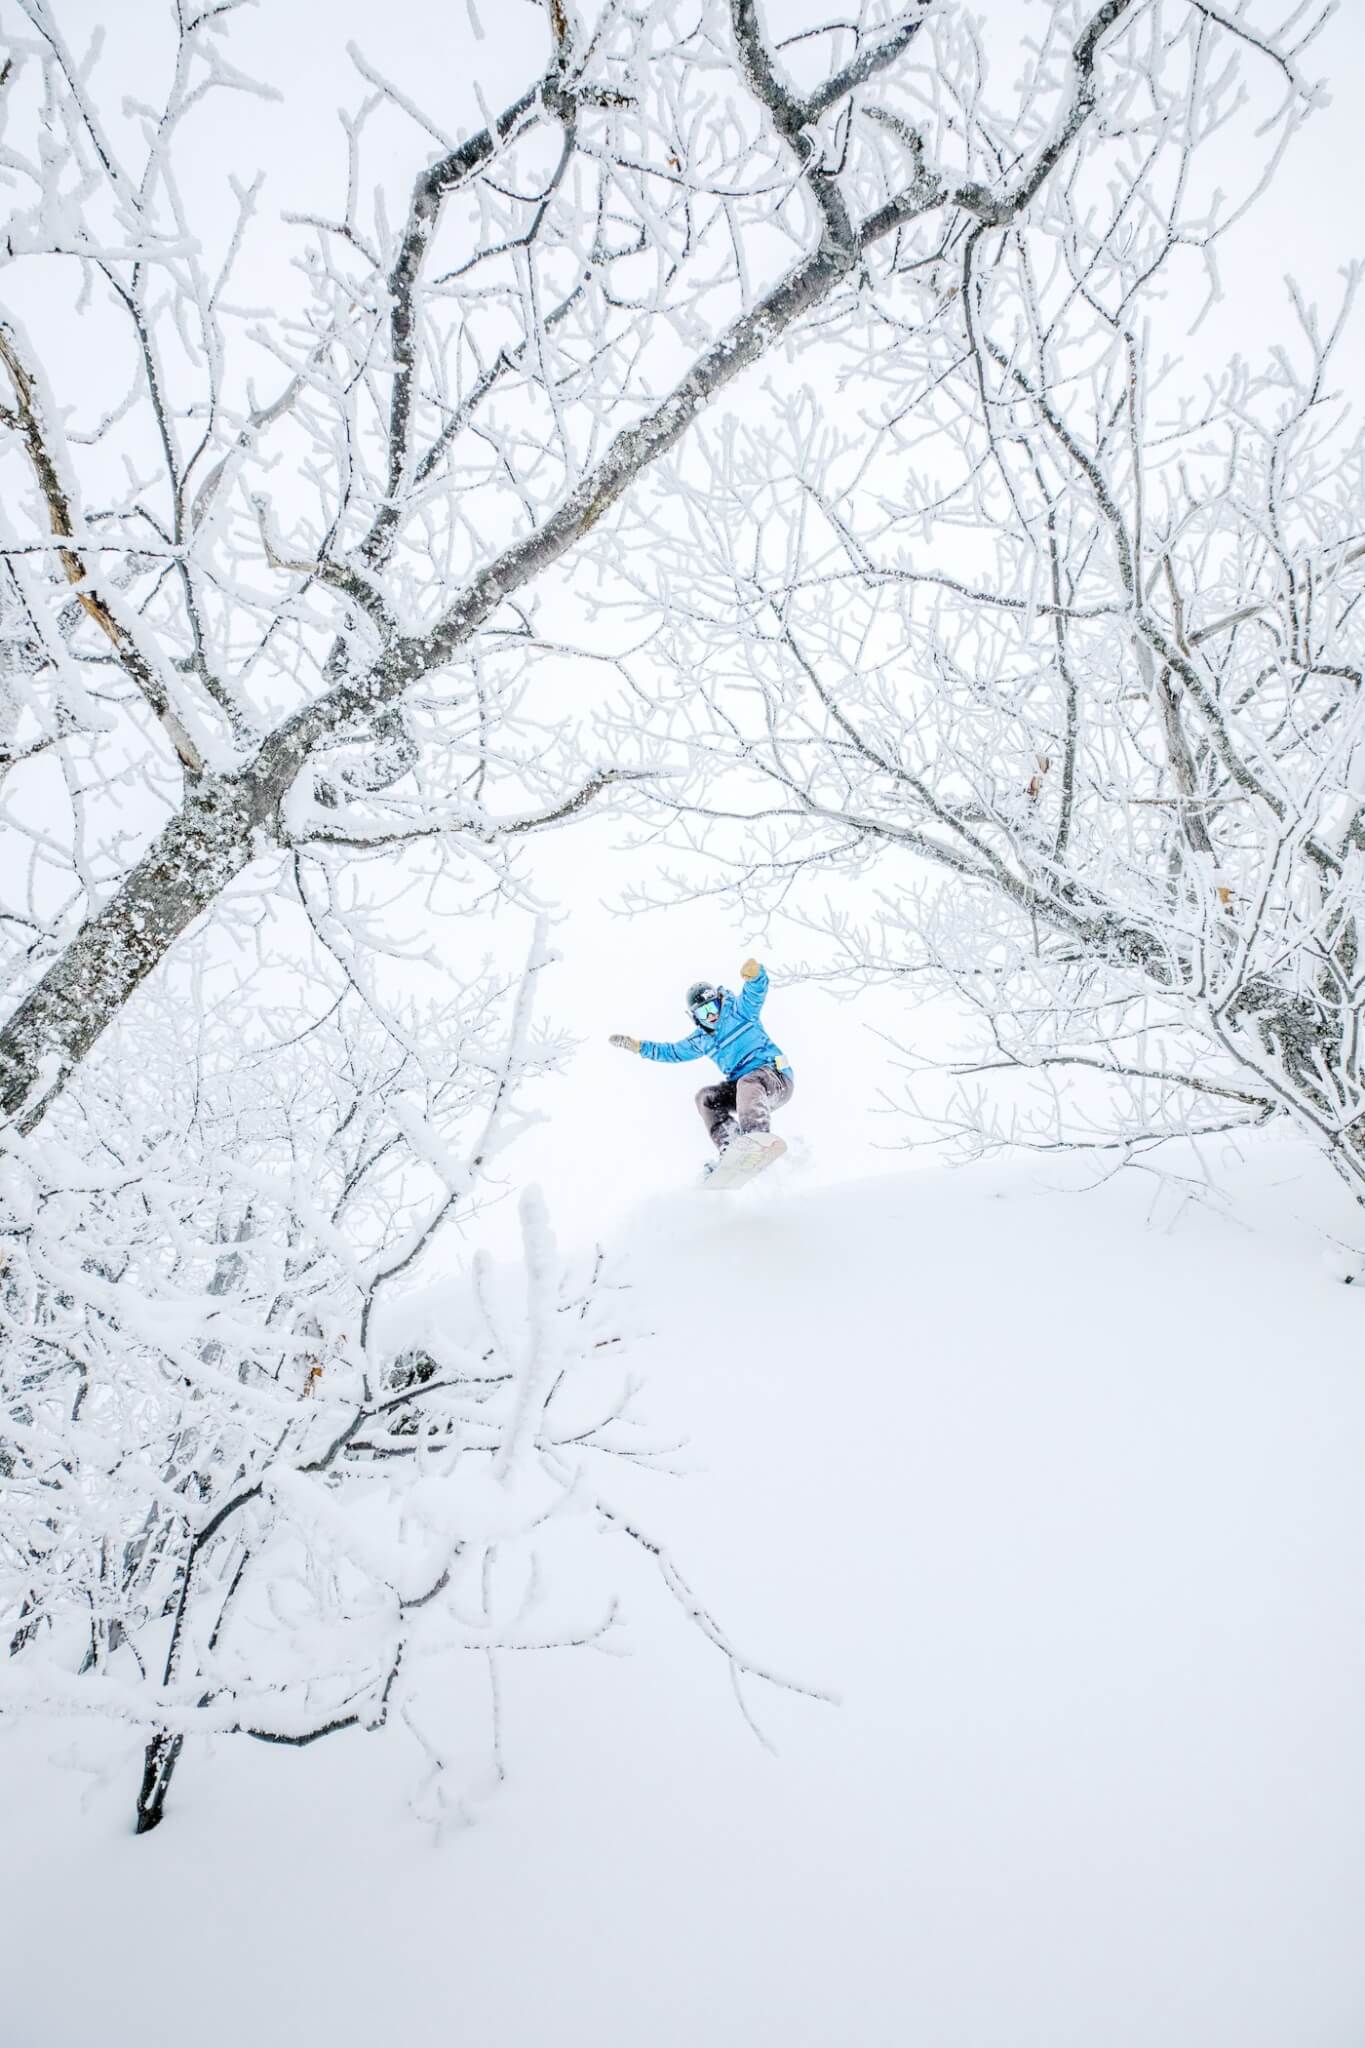 Snowboarder enjoying the powder at Mount Bohemia showcasing upper peninsula skiing at its best